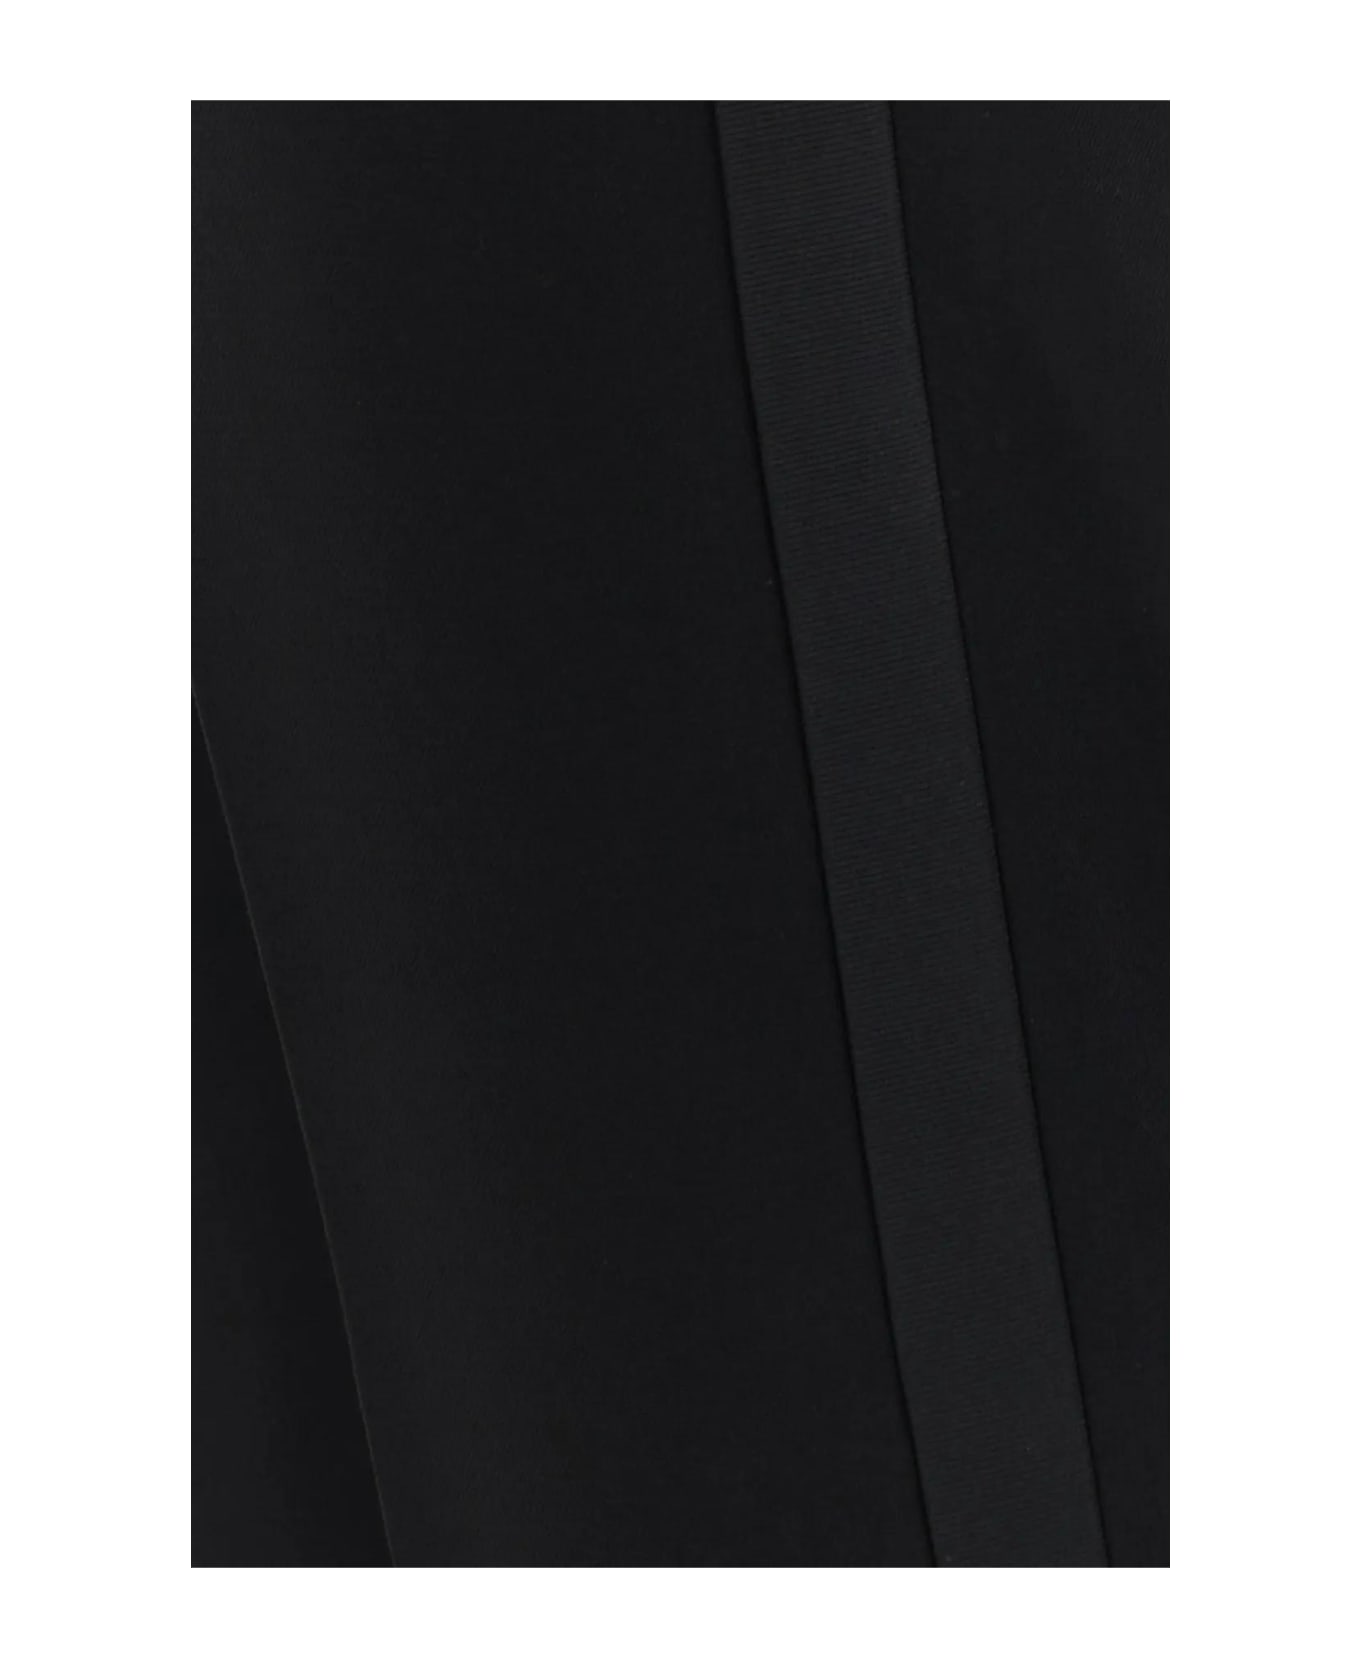 Giorgio Armani Black Fabric Suit - BLACK